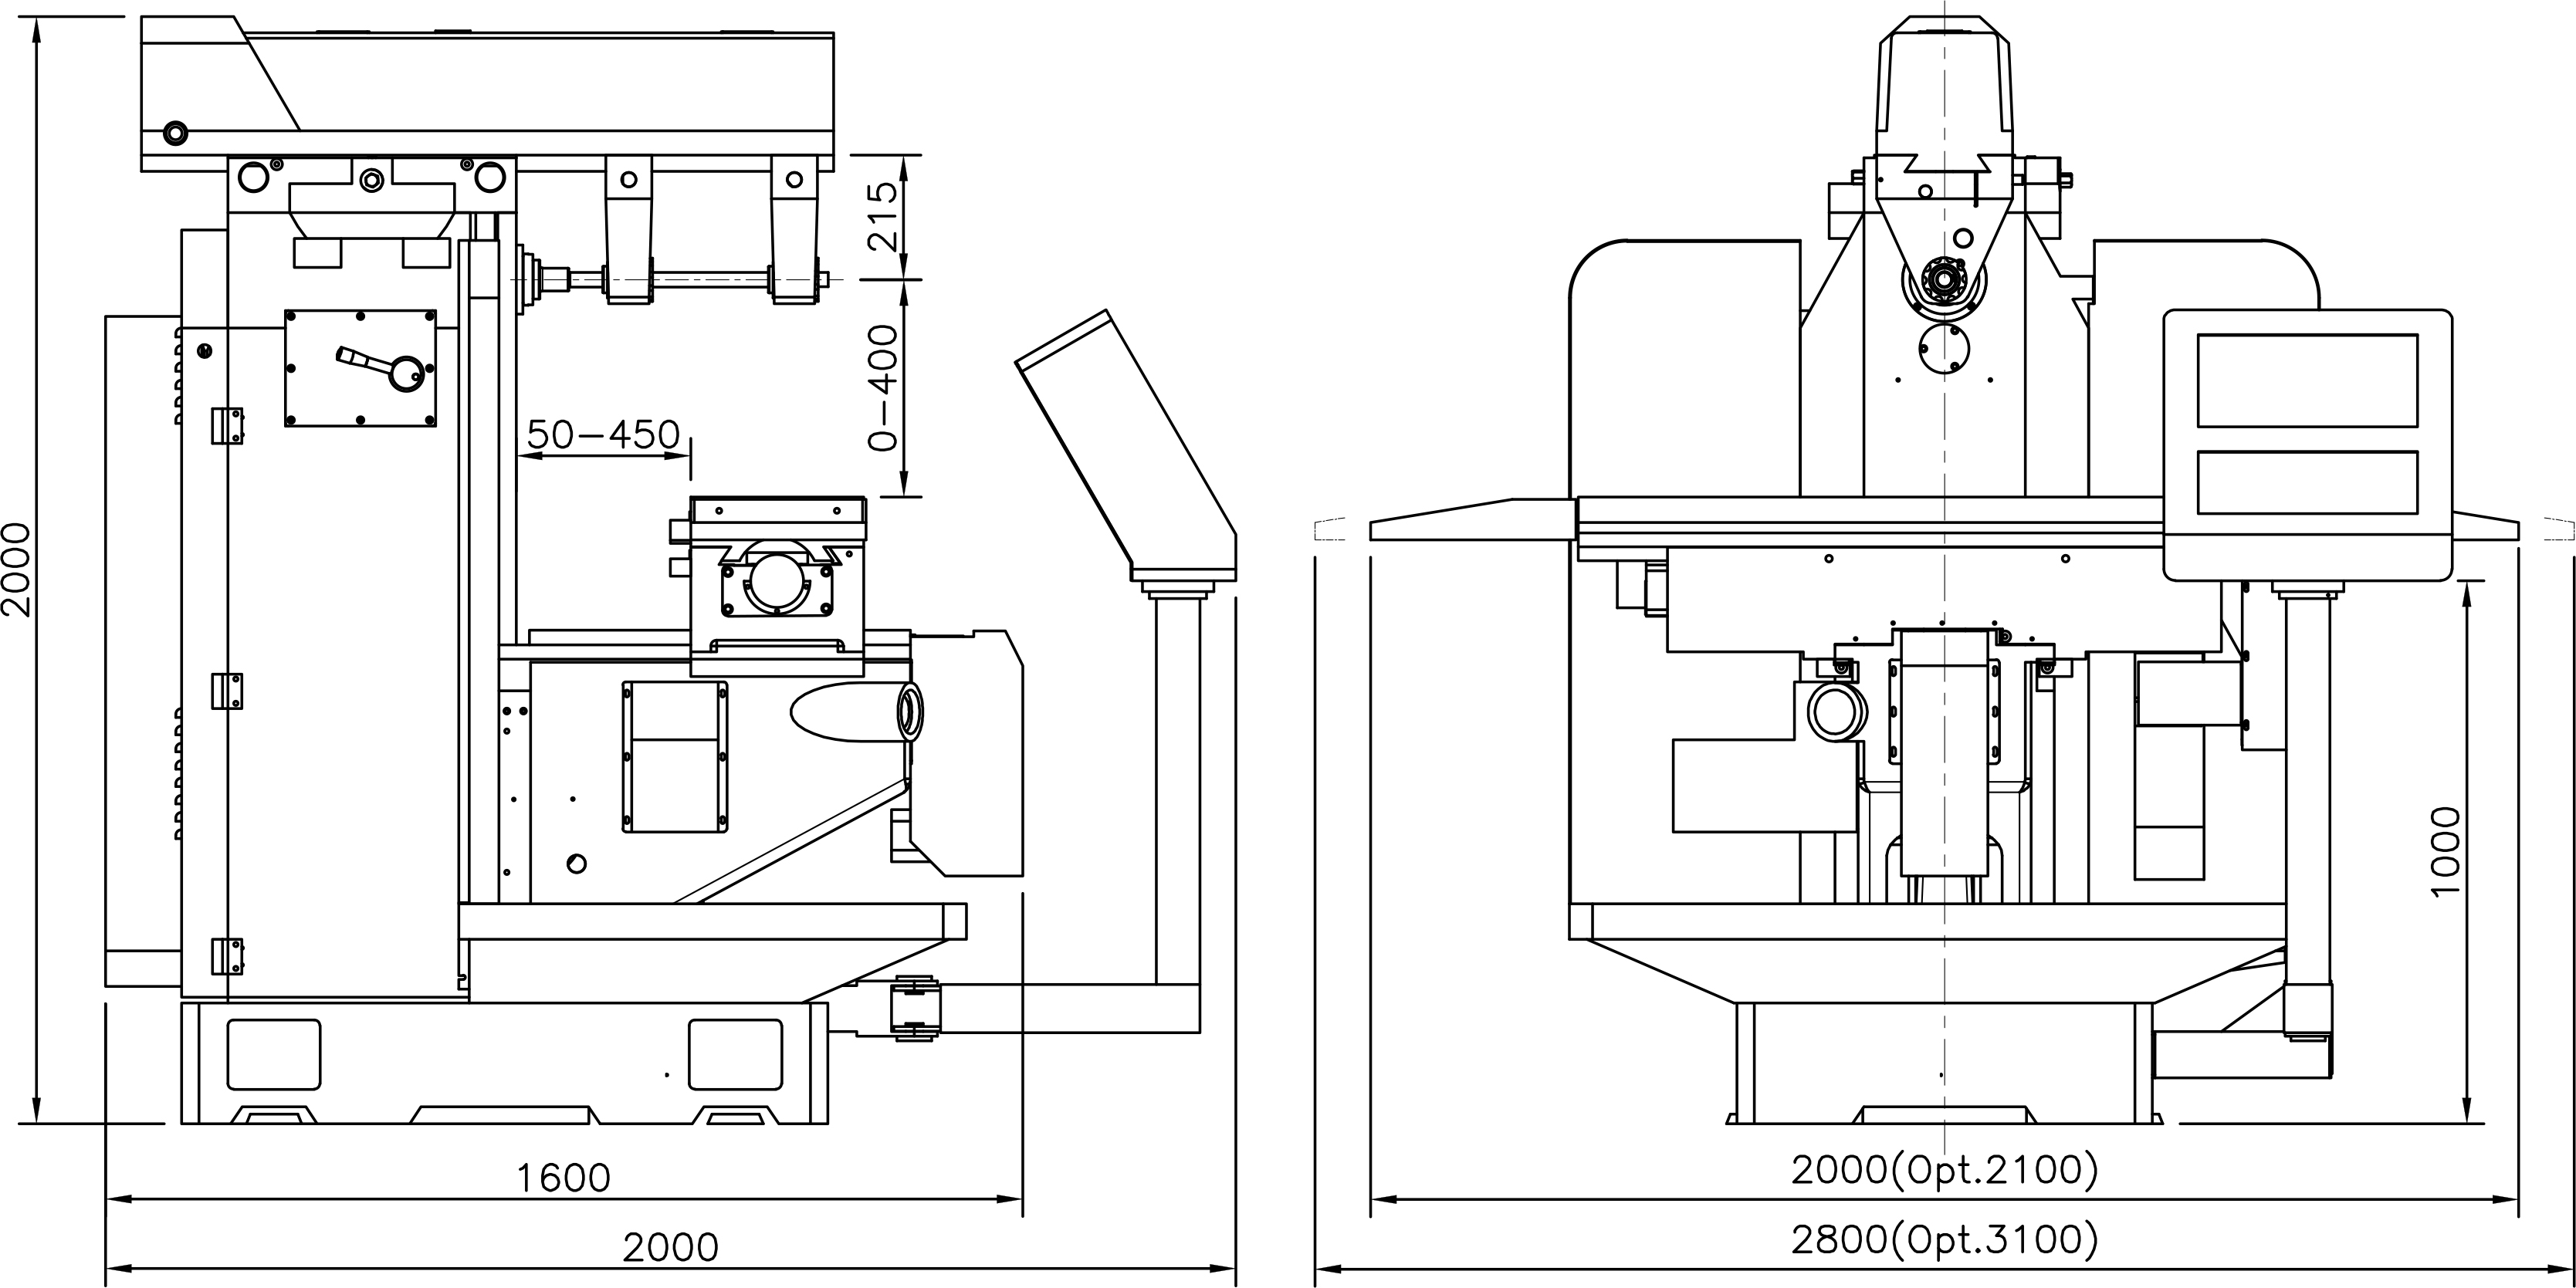 CNC Horizontal Milling Machine-YSM-26HNC